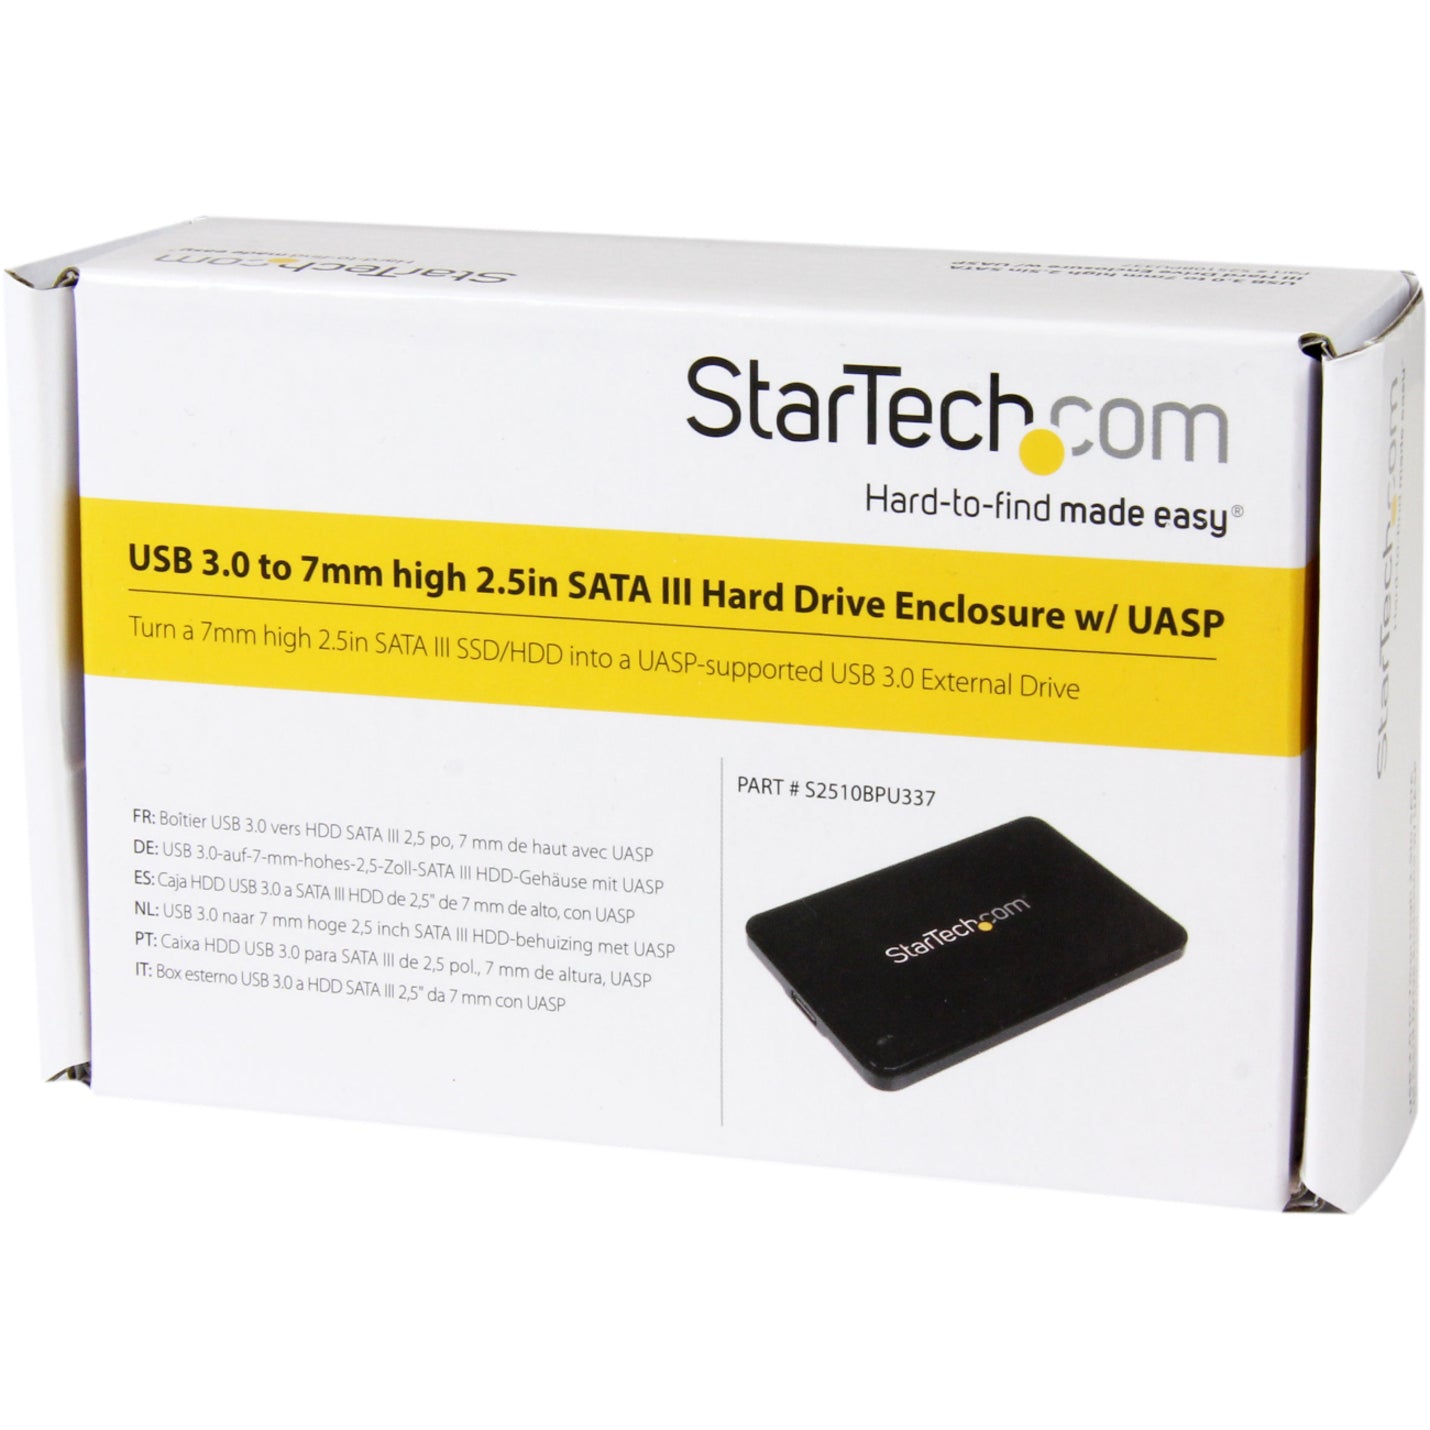 StarTechcom S2510BPU337 25-Zoll-USB-30-SATA-Festplattengehäuse mit UASP schlanker 7-mm-SATA-III-SSD/HDD schneller Datentransfer